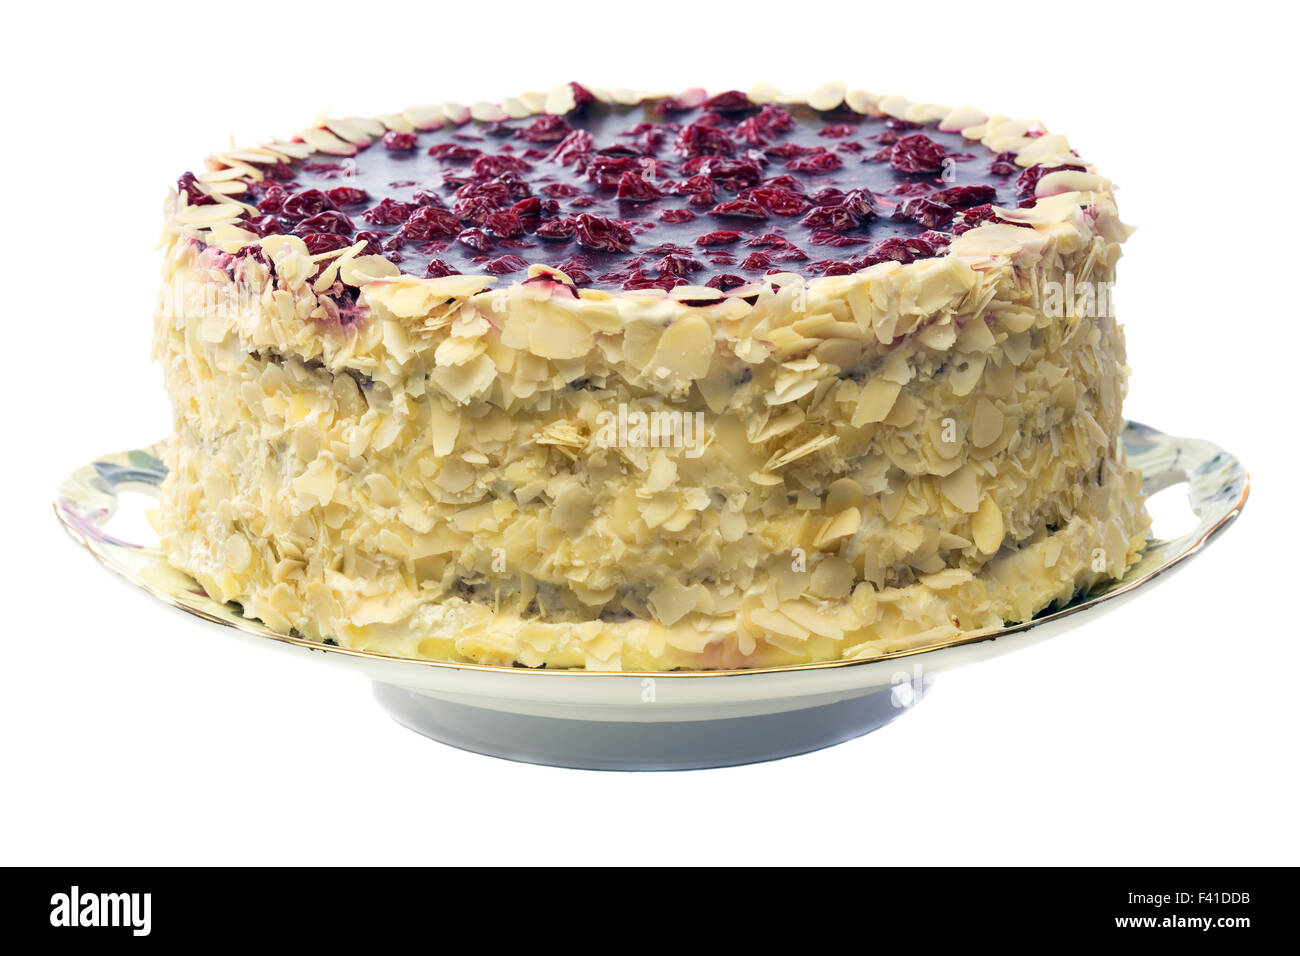 Cake with cherry jelly. Stock Photo